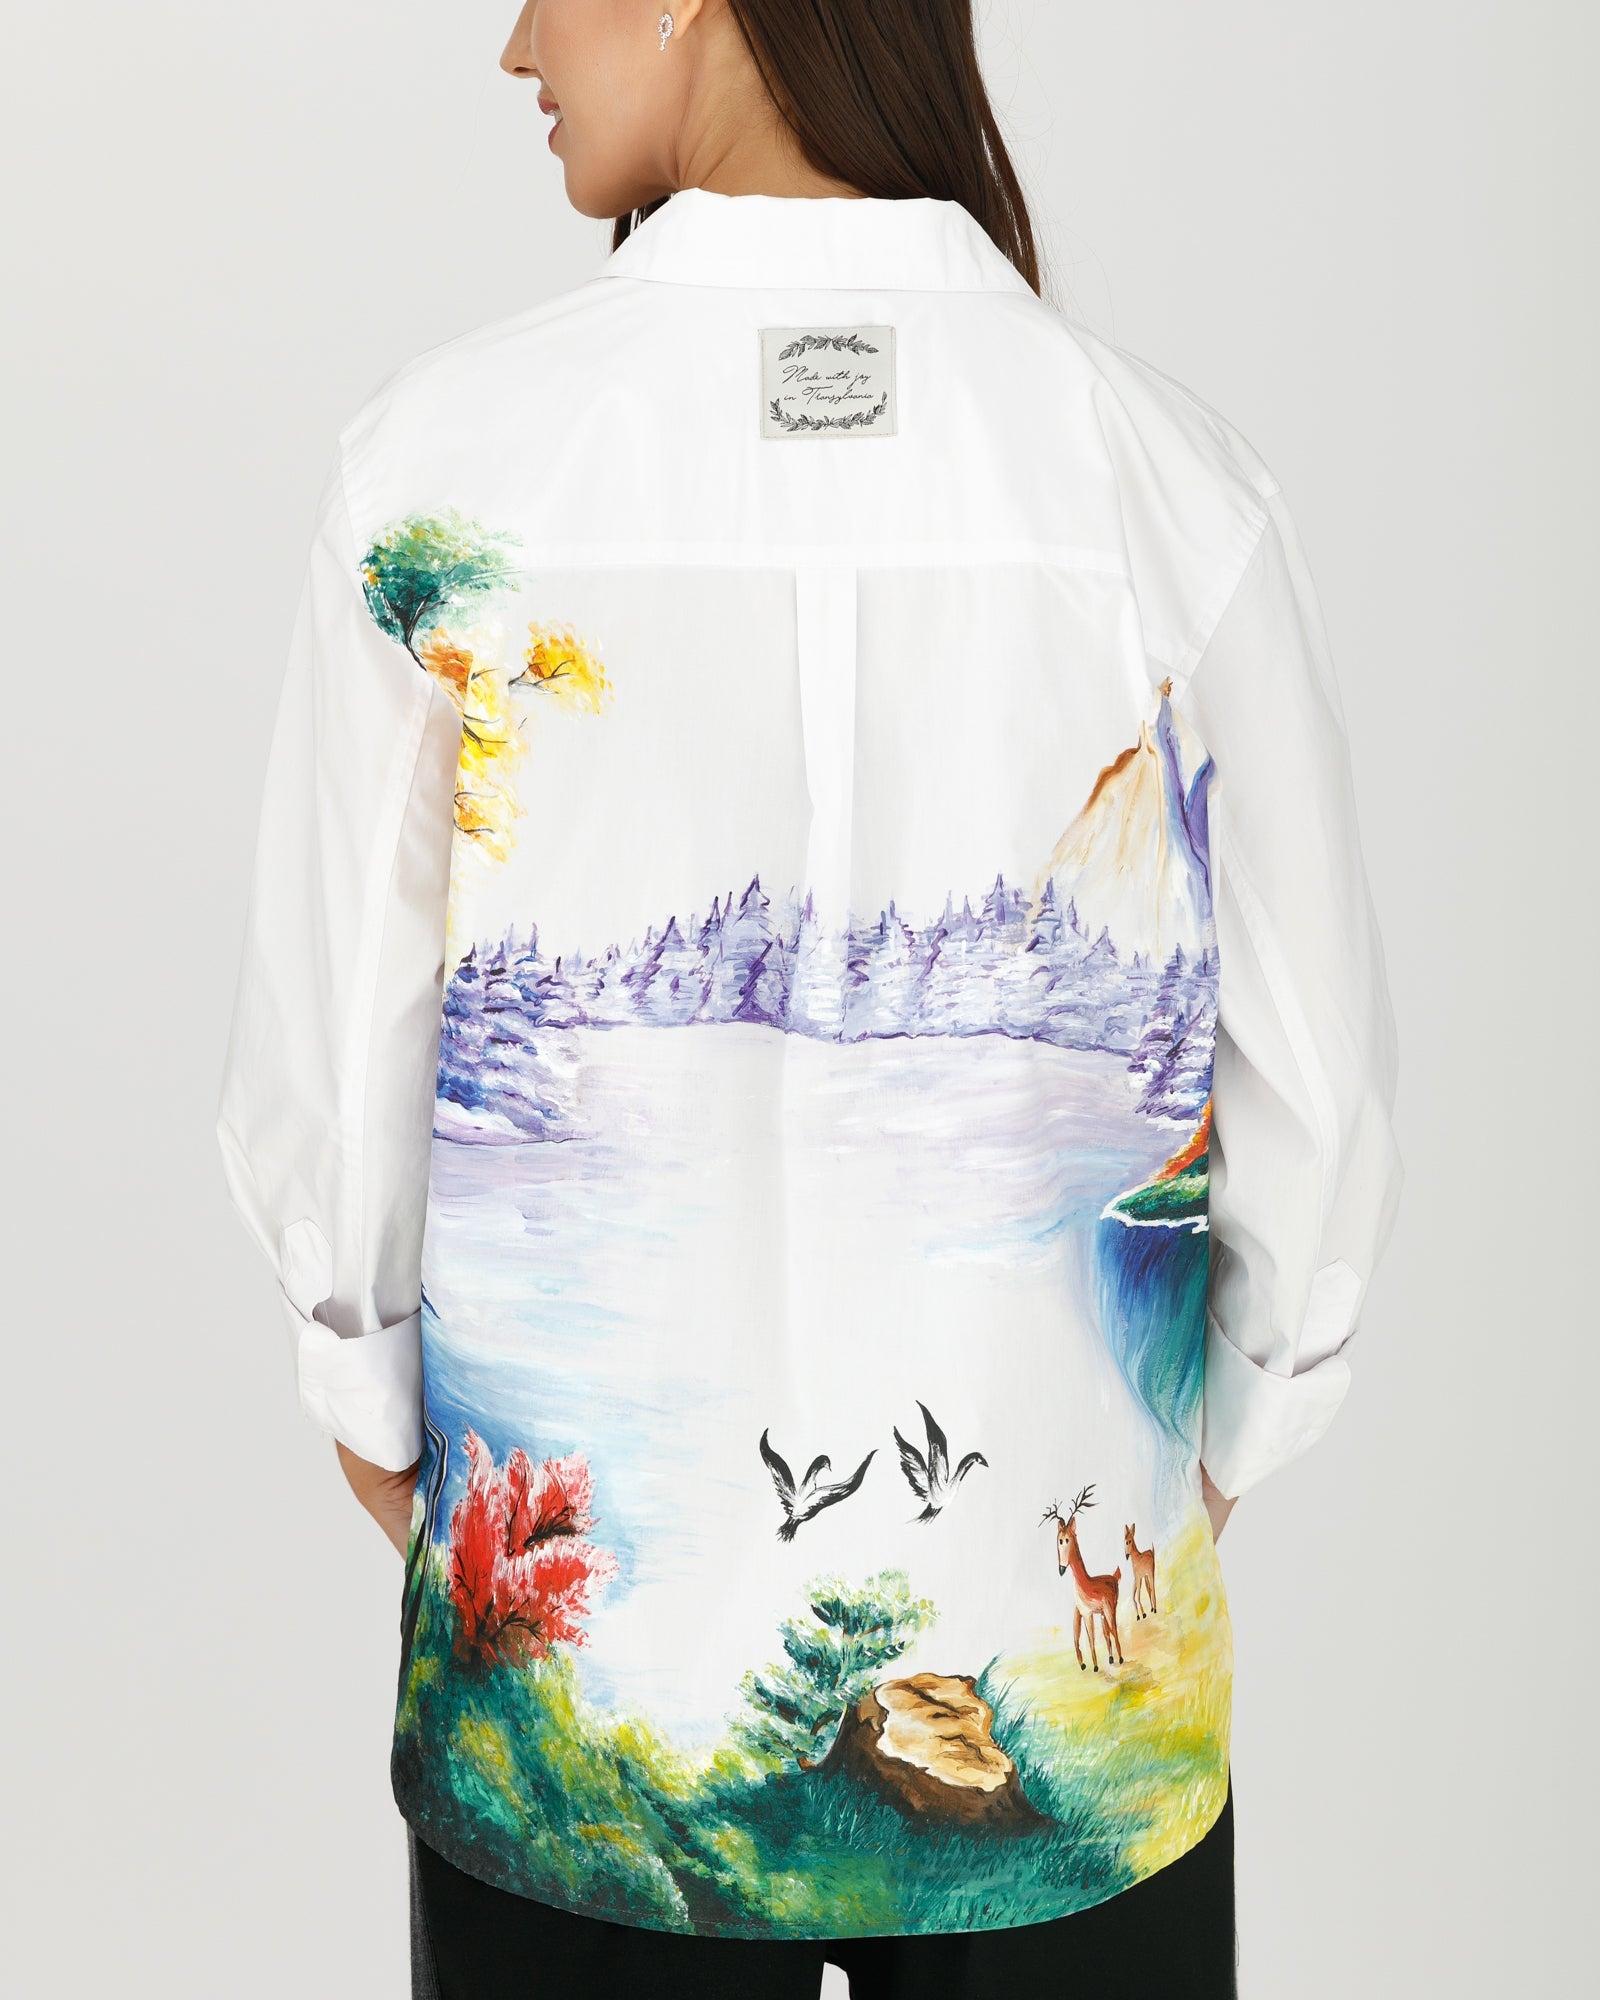 Women's hand-painted shirt "Nature feelings"